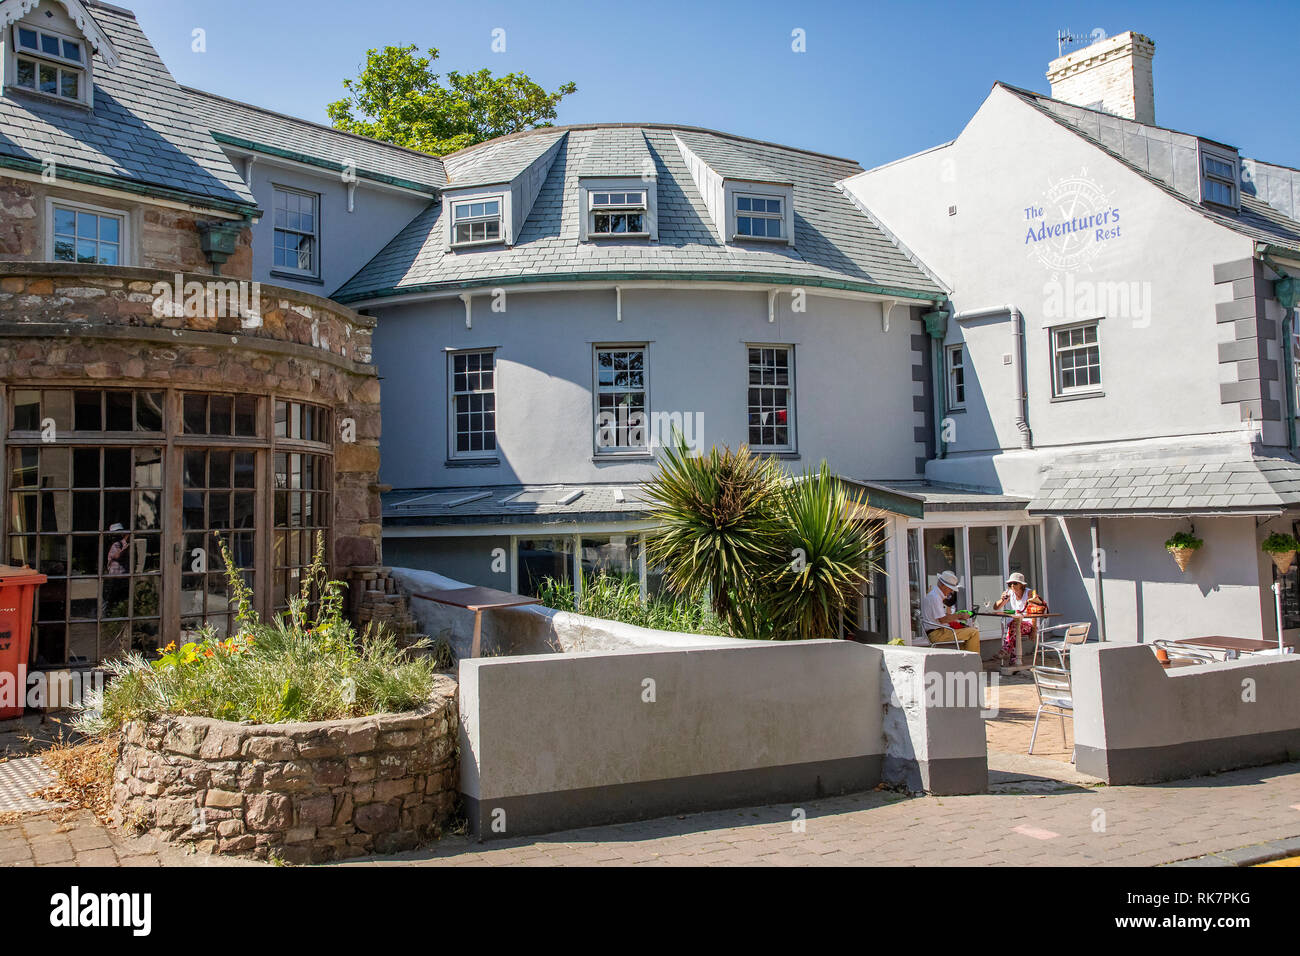 The Adventurers Rest Inn on Victoria Street Alderney Stock Photo